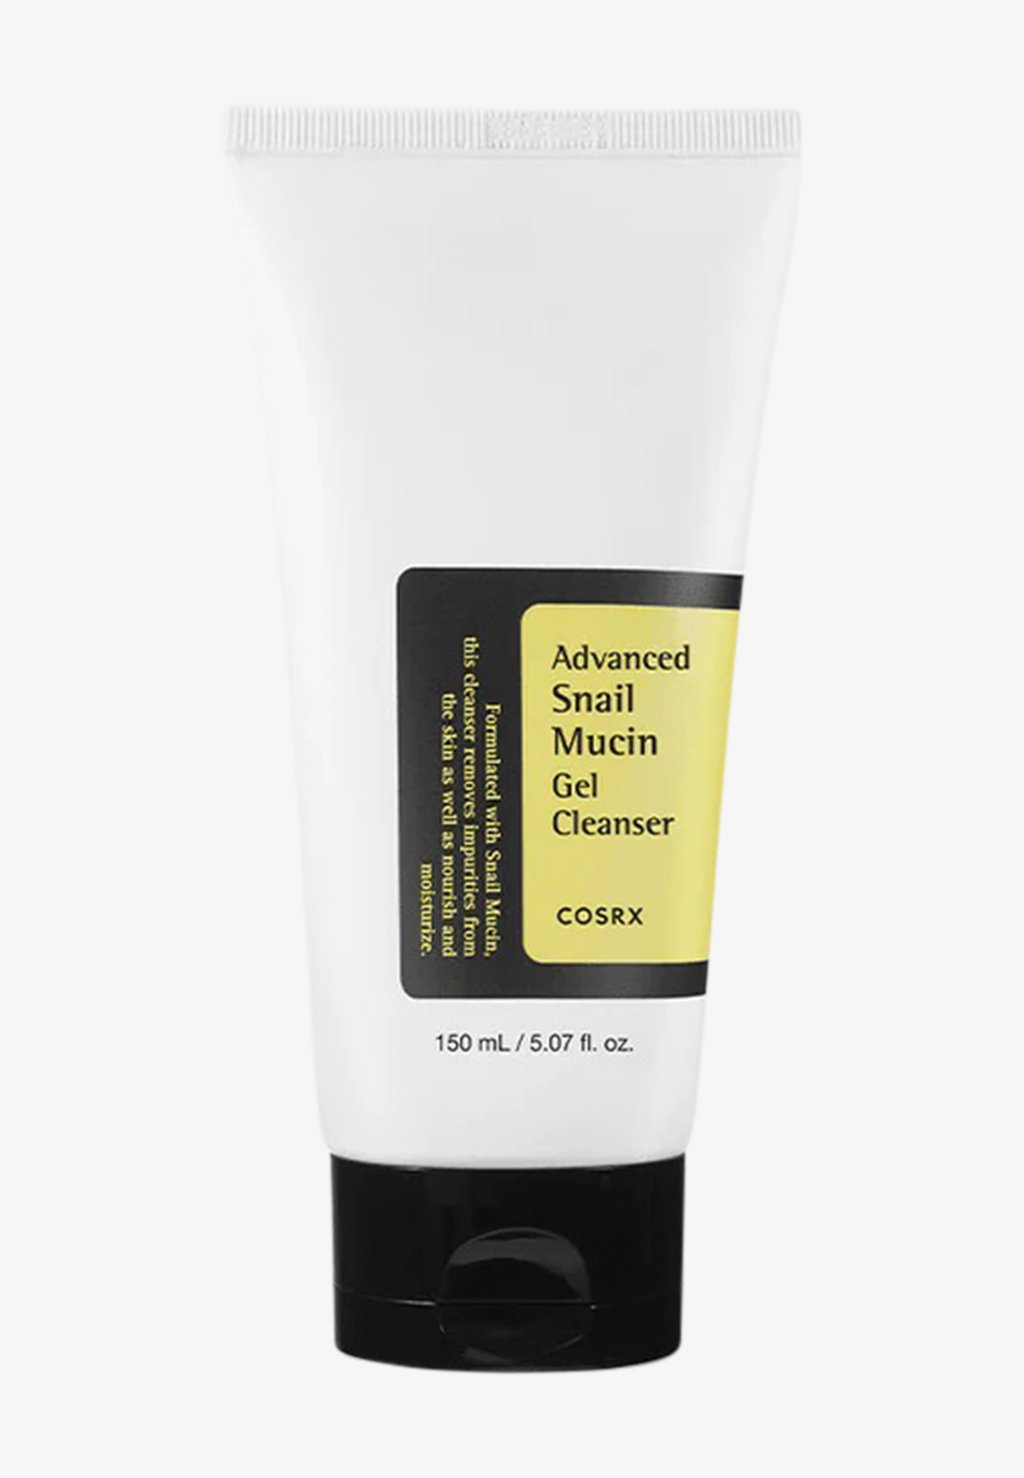 cosrx gel advanced snail mucin 5 fl oz 150 ml Очищающее средство Advanced Snail Mucin Power Gel Cleanser COSRX